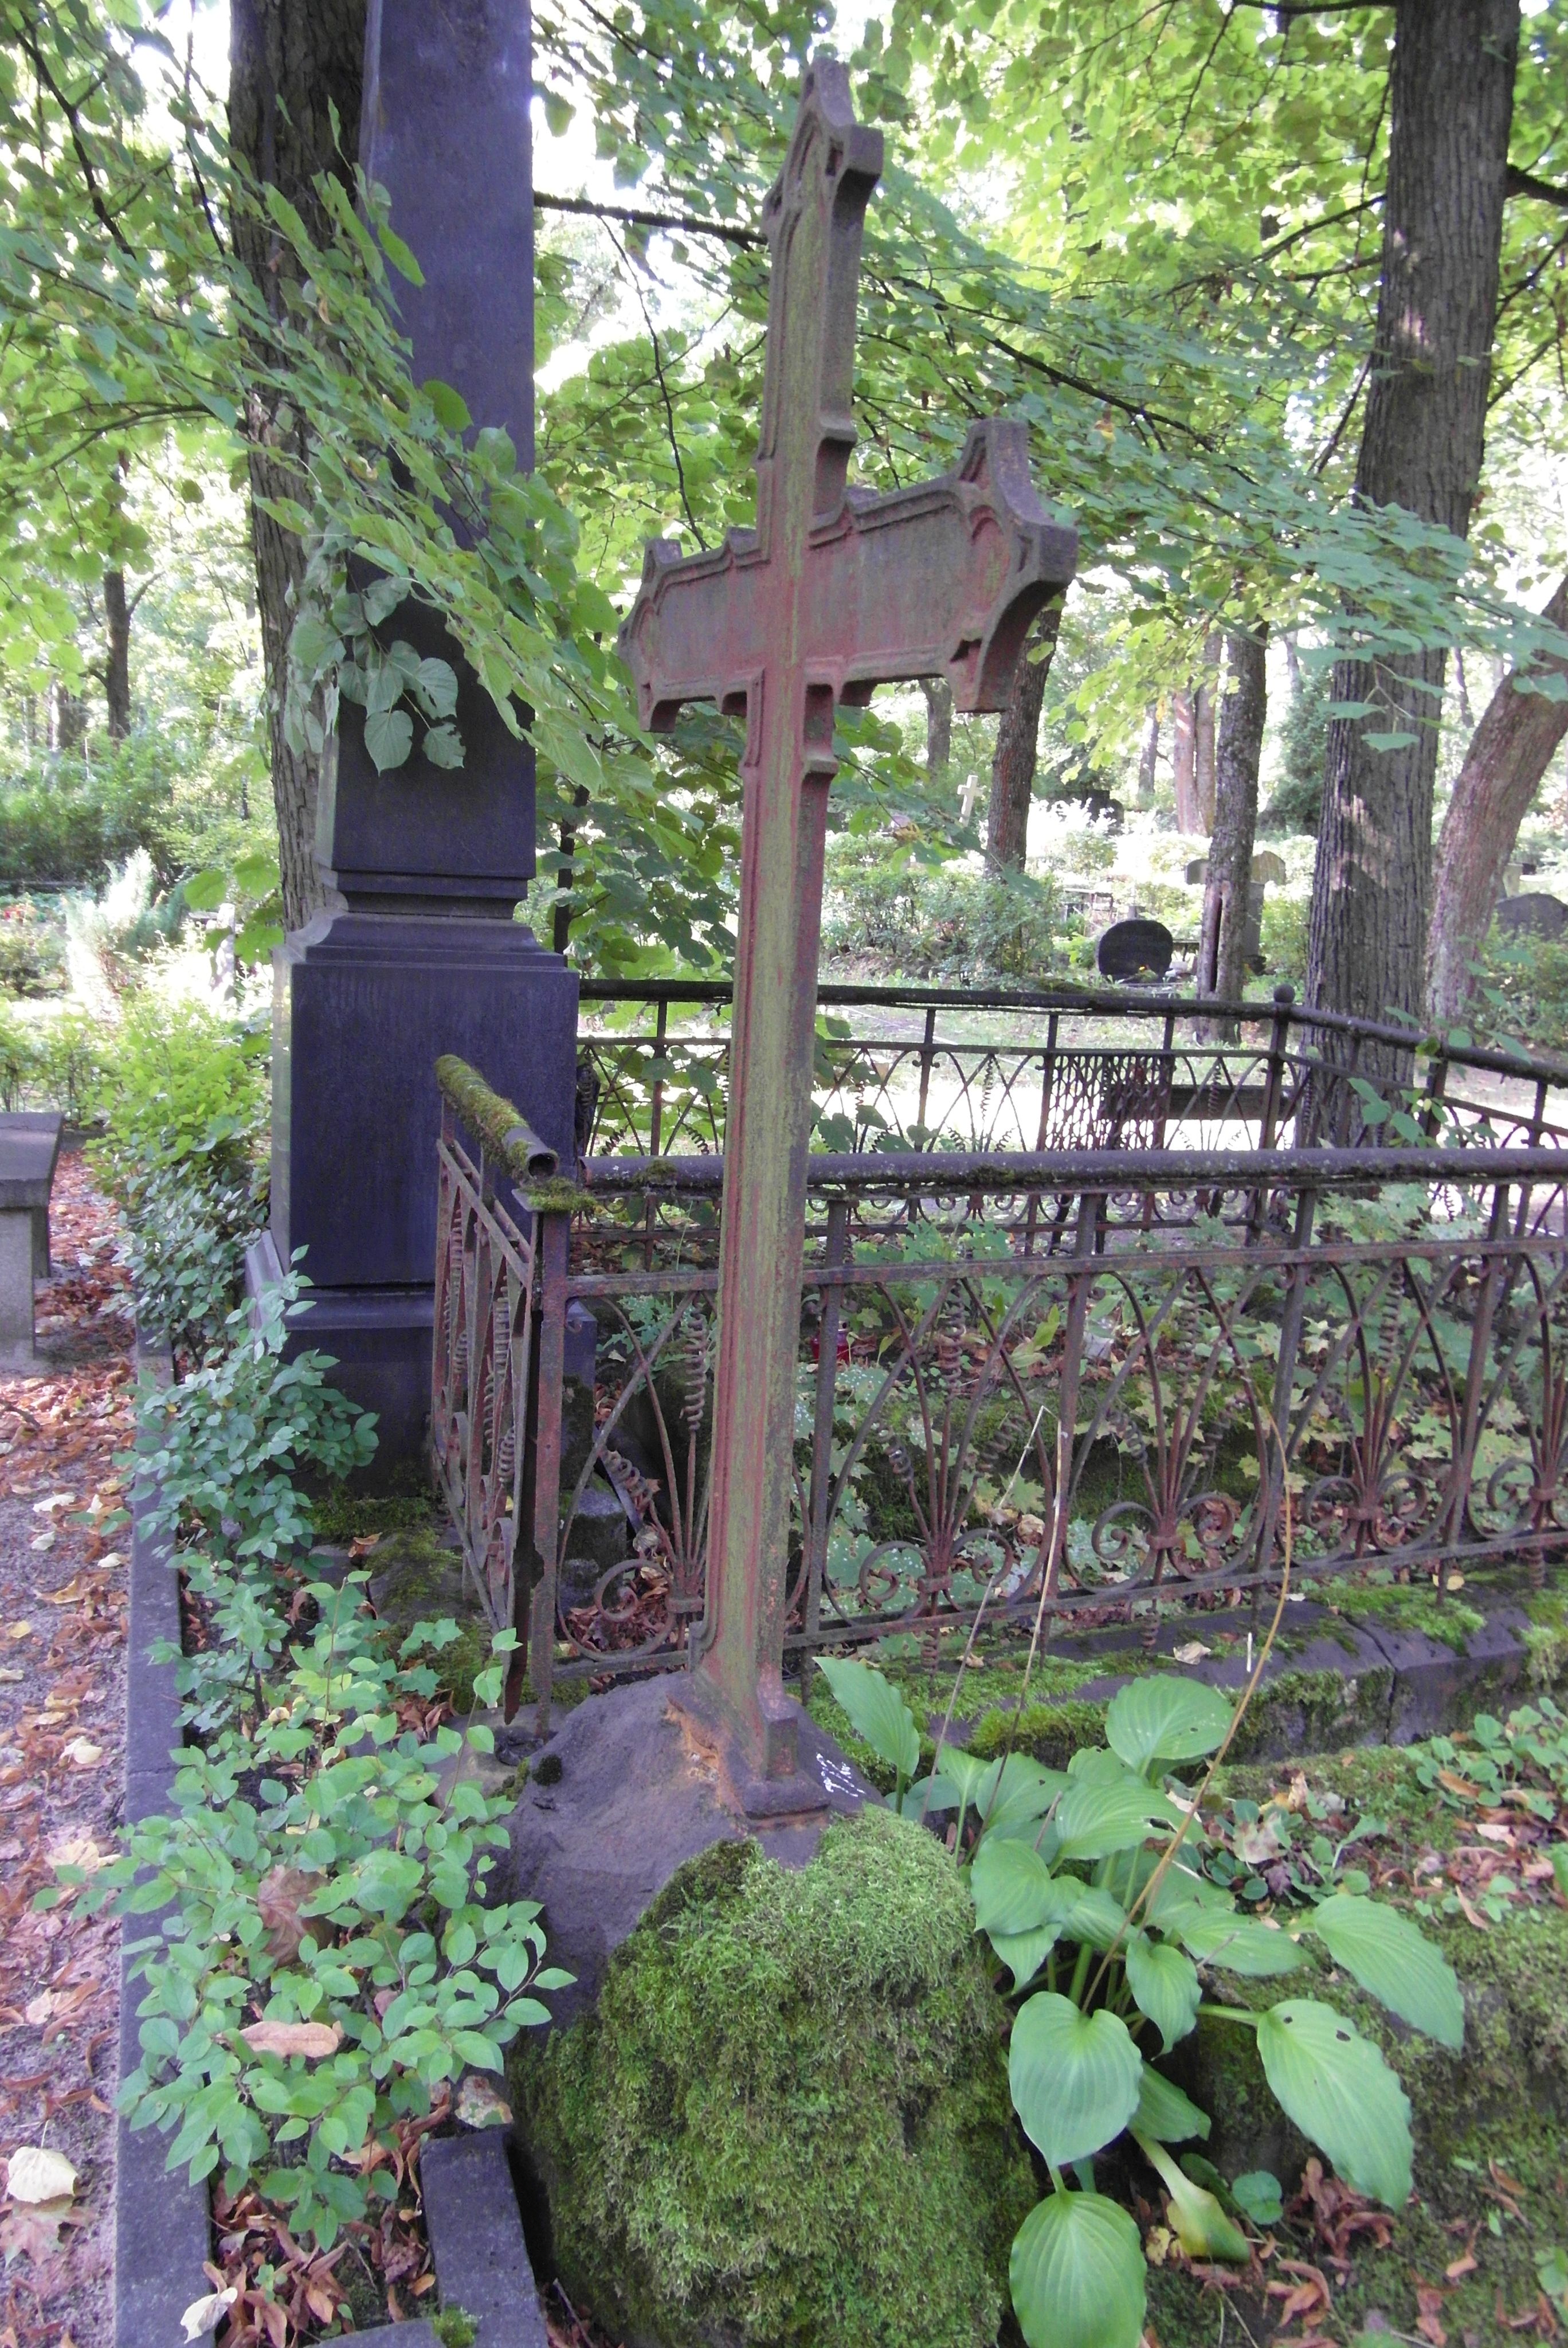 Tombstone of Klara Oleszkiewicz, St Michael's cemetery in Riga, as of 2021.